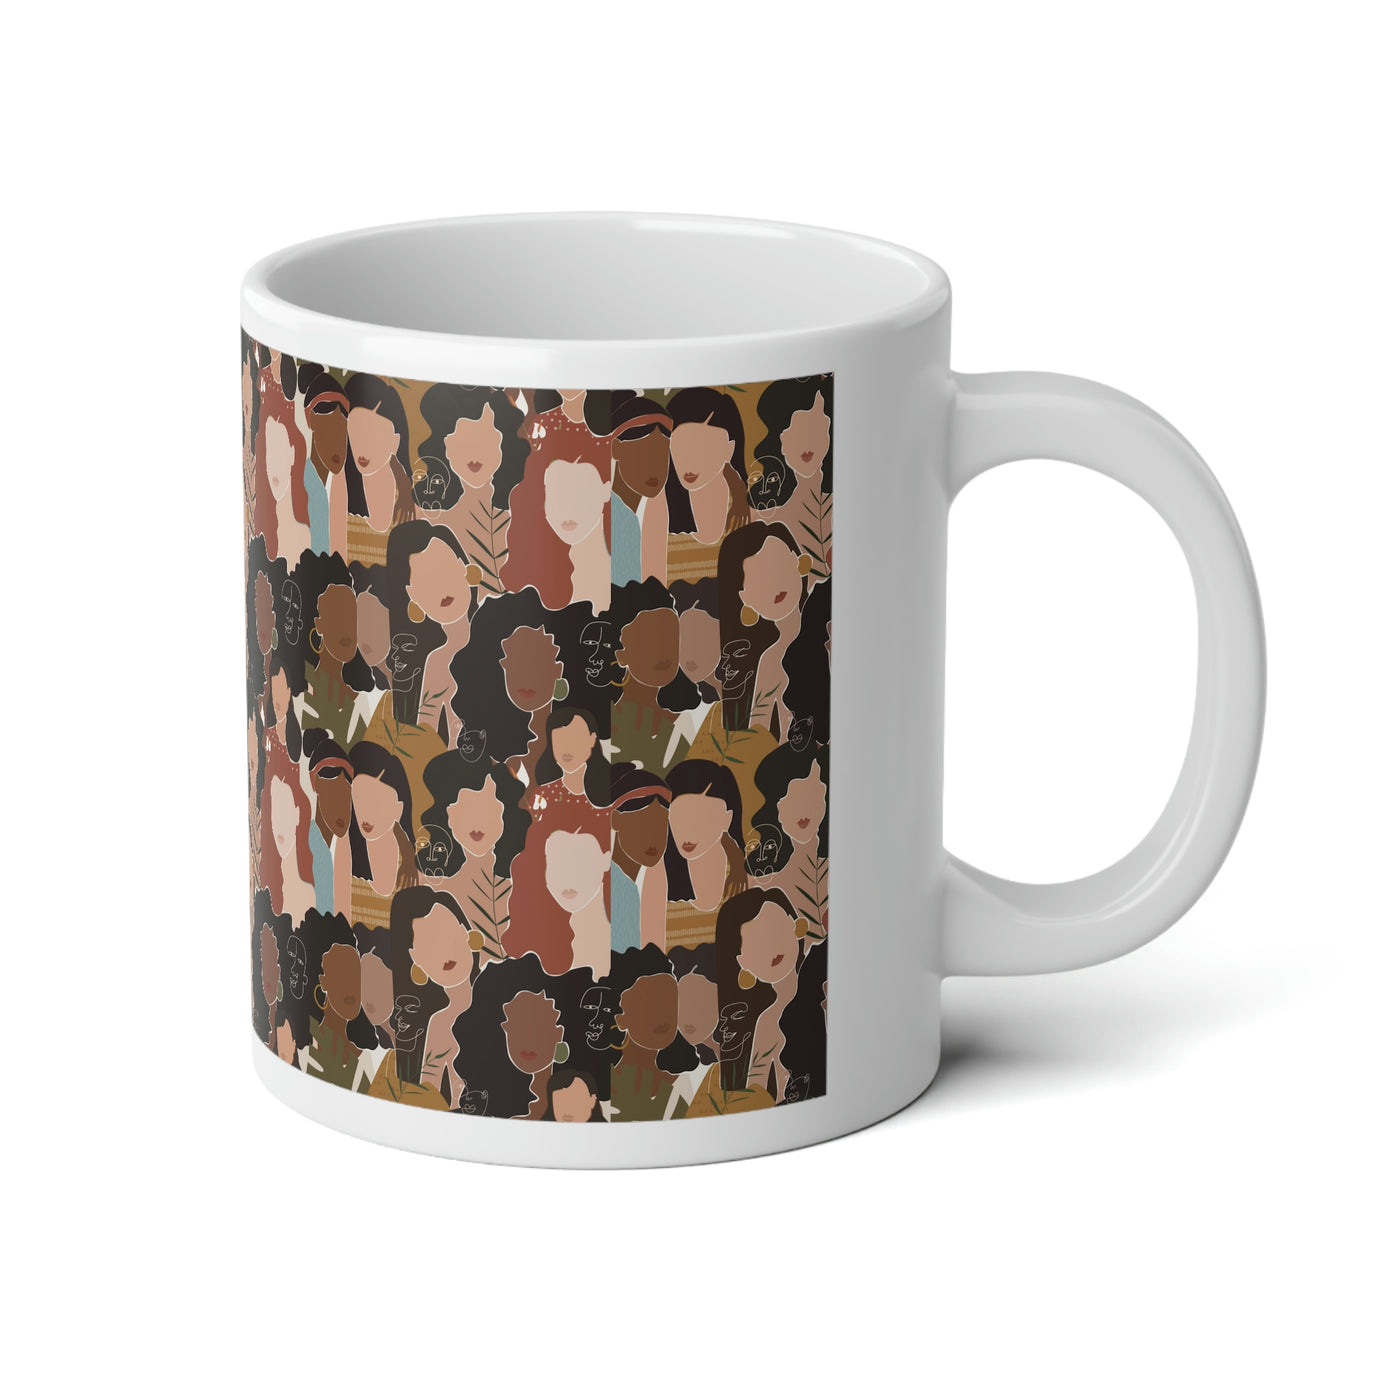 Community of Women 20 oz Mug